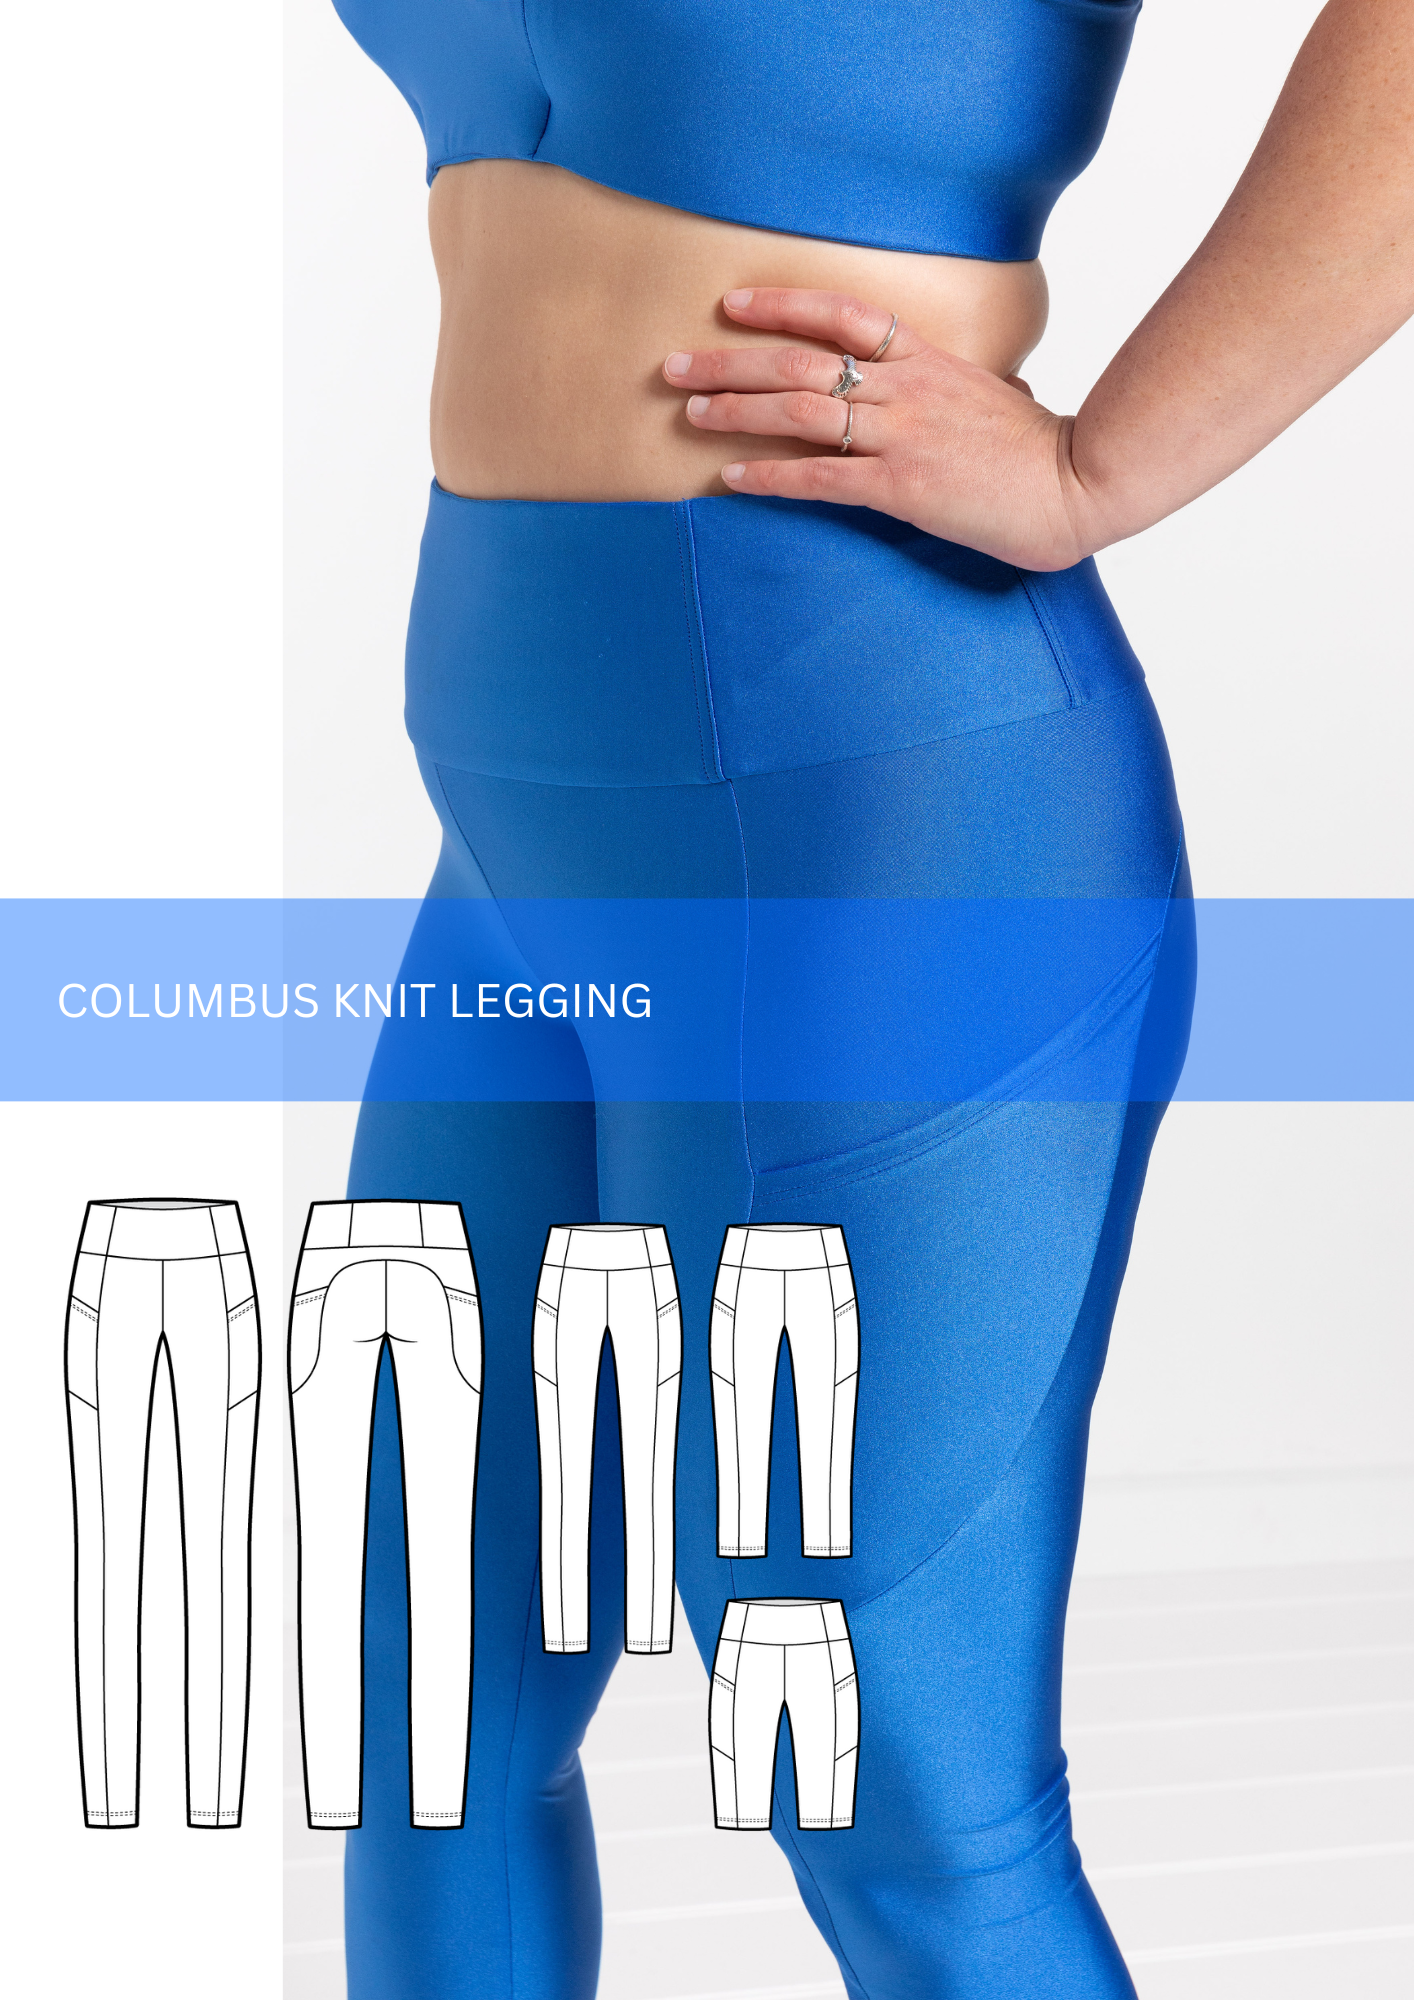 Columbus Knit Legging | New Pattern